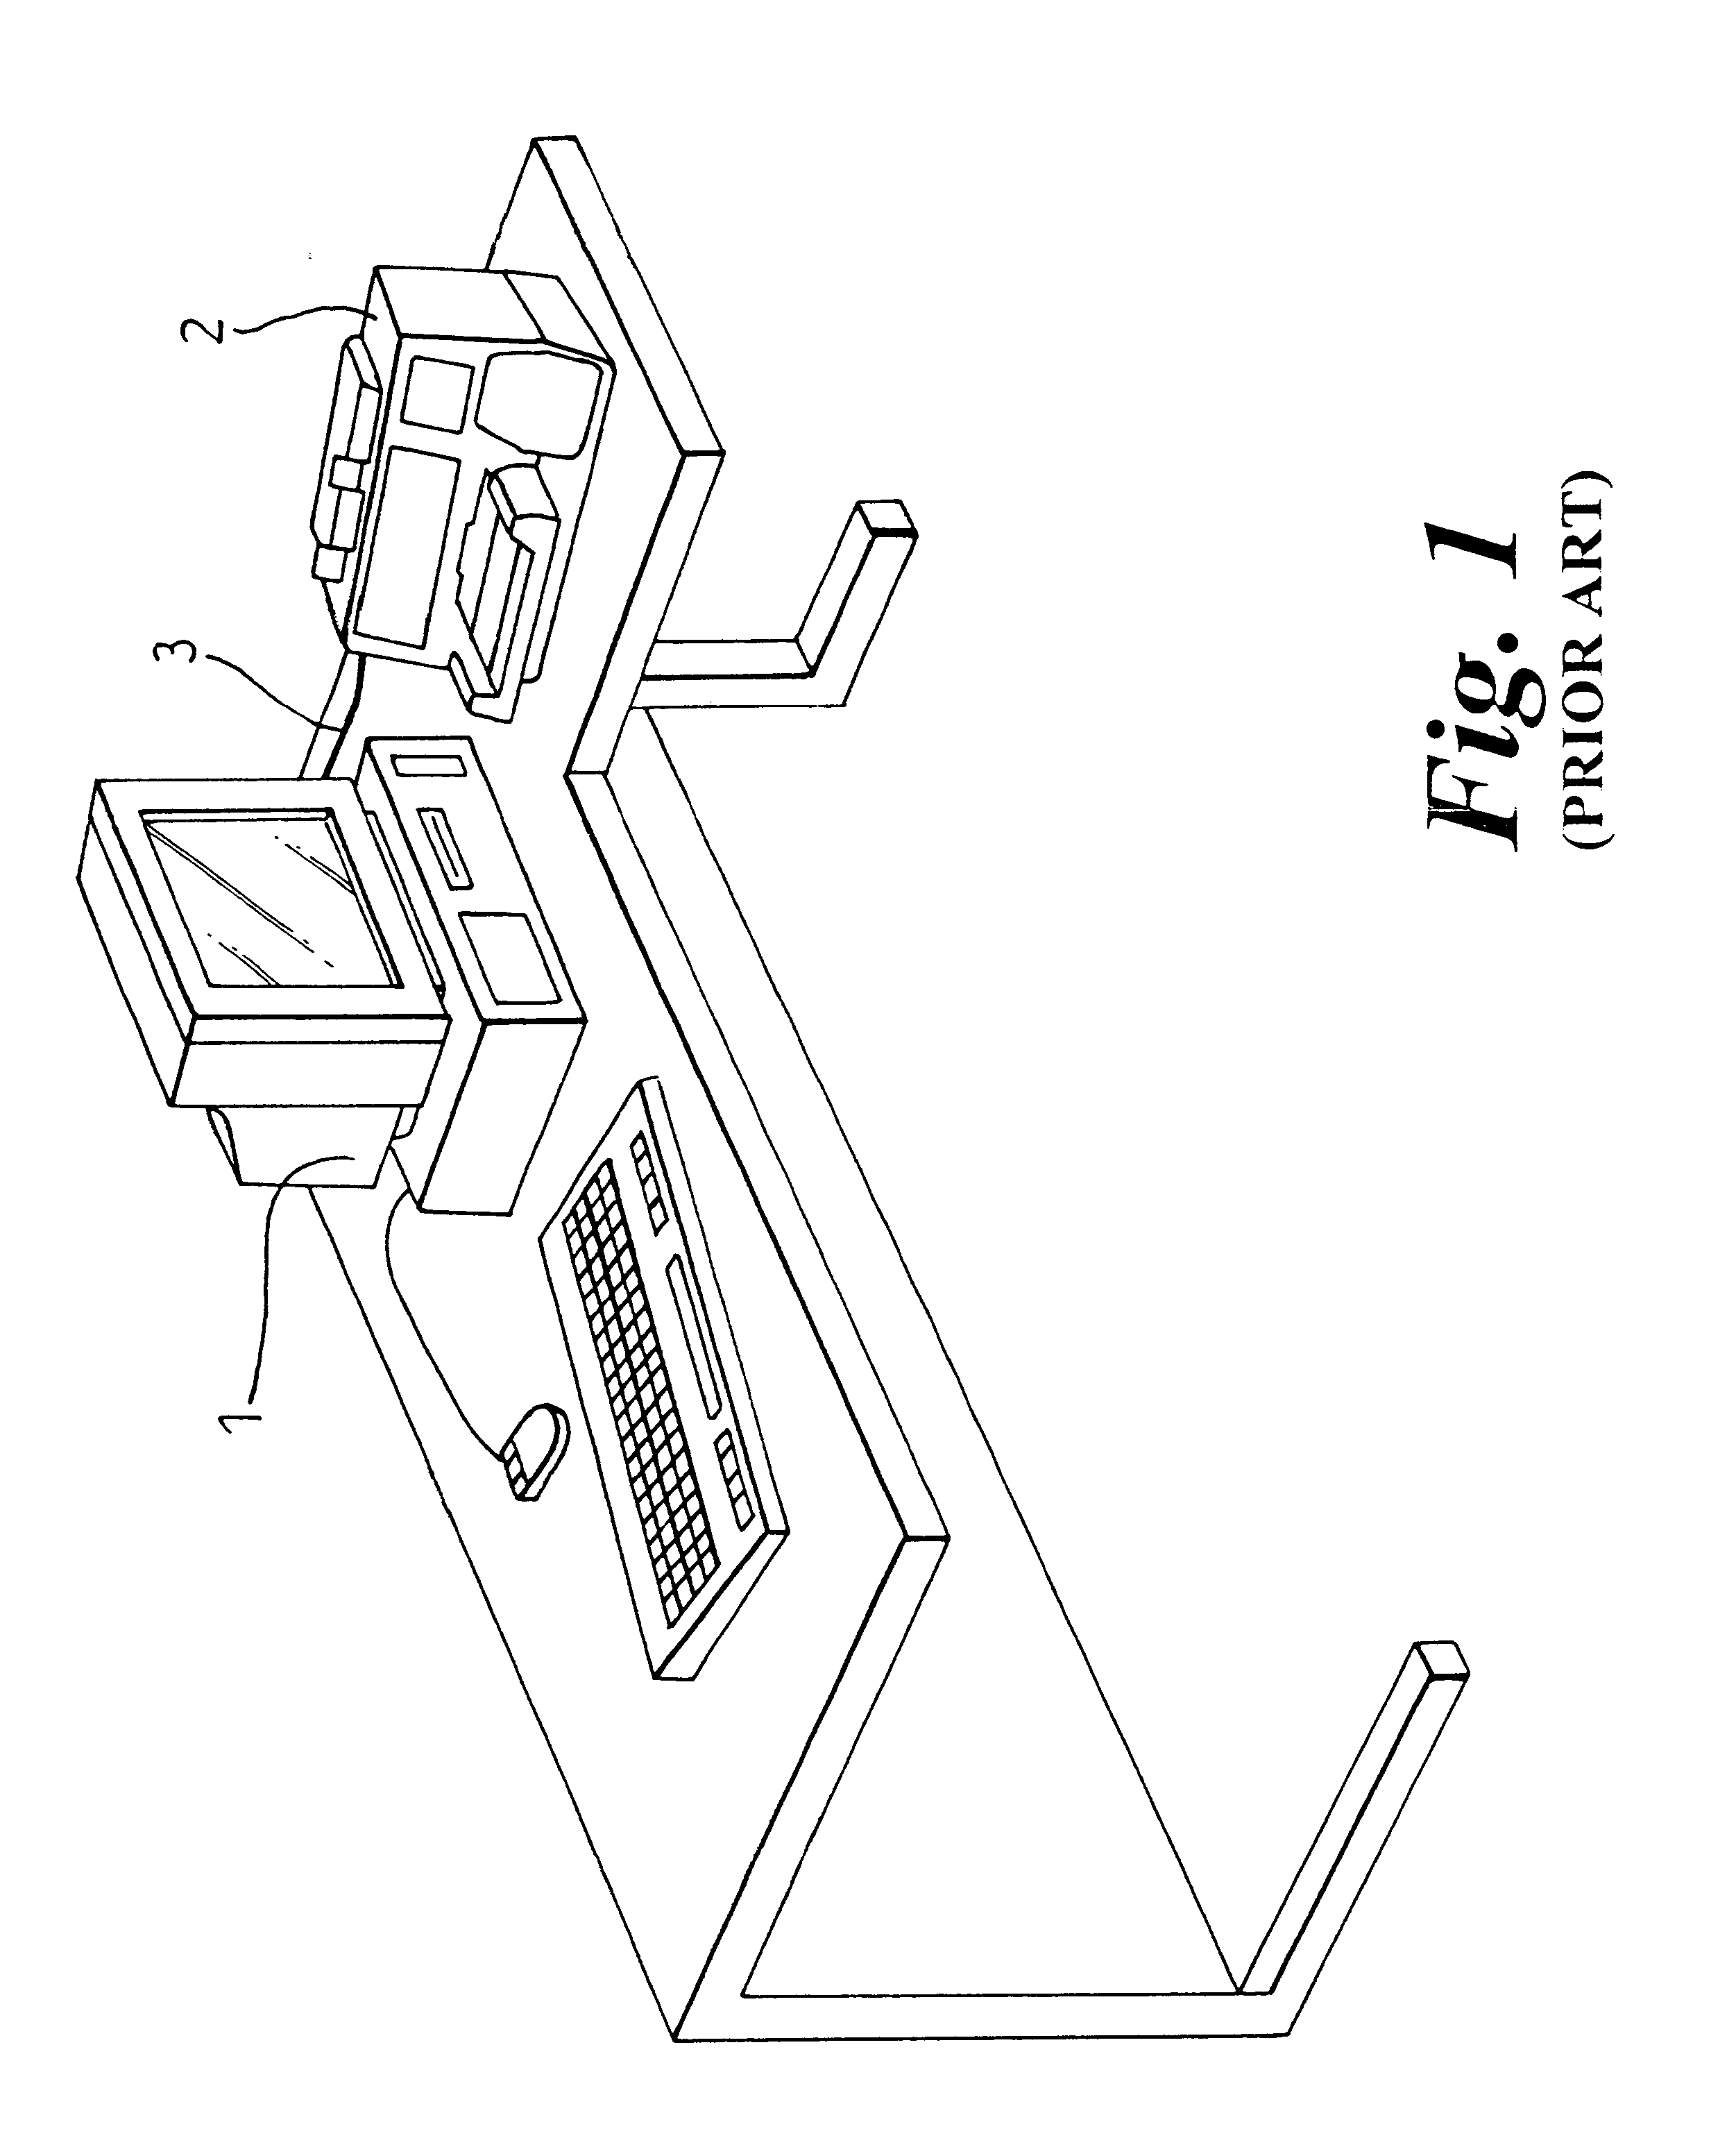 Printer device alignment method and apparatus